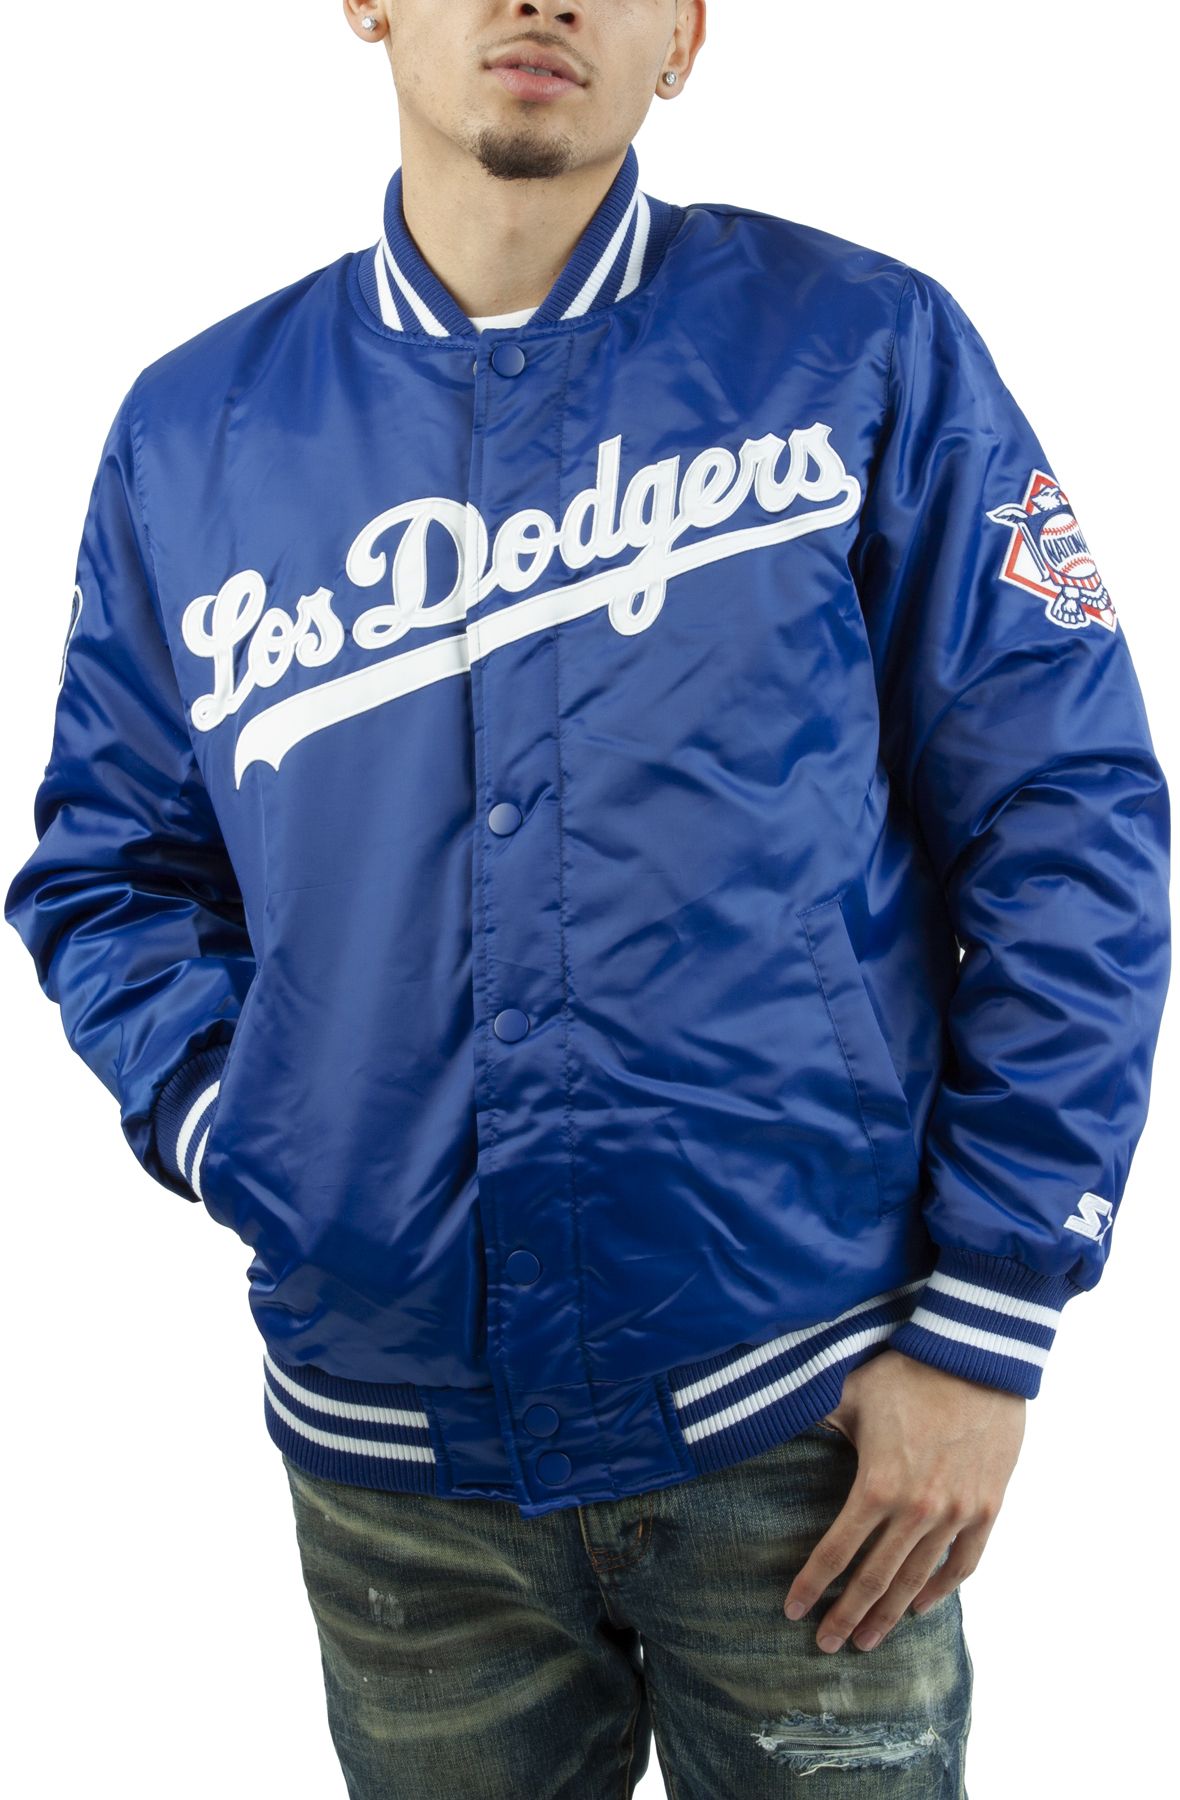 The Ace Dodgers Satin Royal Blue Jacket